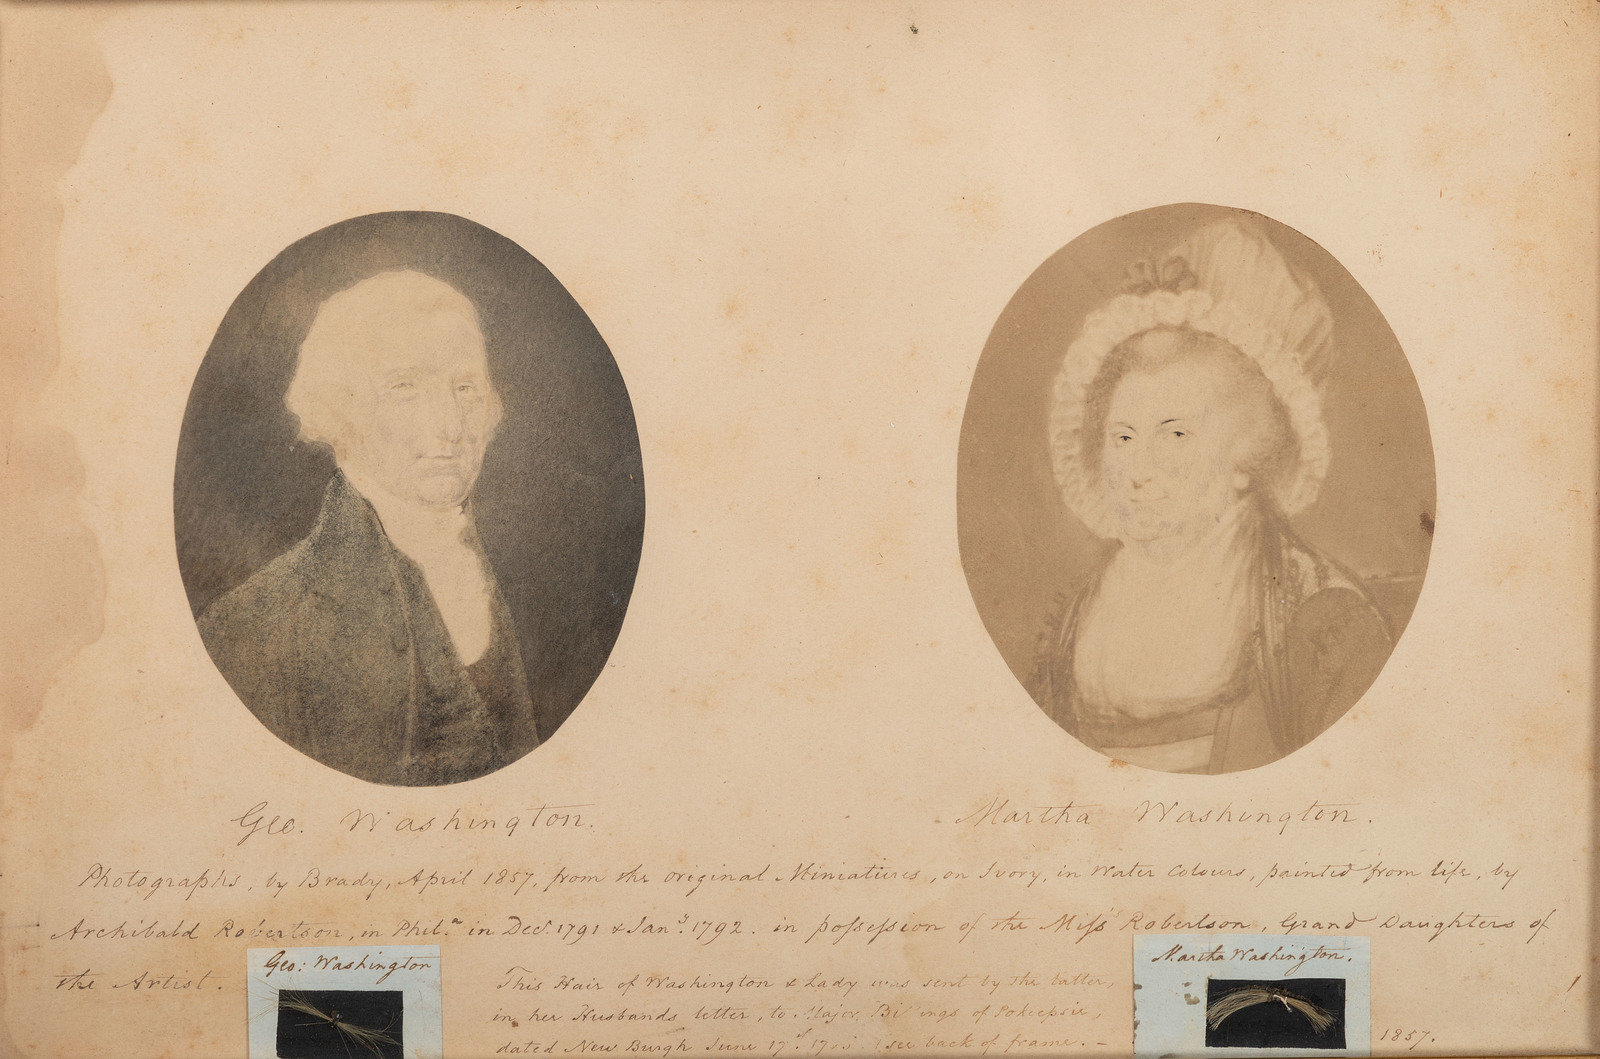 POLITICS]. WASHINGTON, George (1732-1799) and Martha Dandridge Custis  WASHINGTON (1731-1802). Locks of hair of George and Martha Washington in  1857 presentation with provenance inscription and portraits.